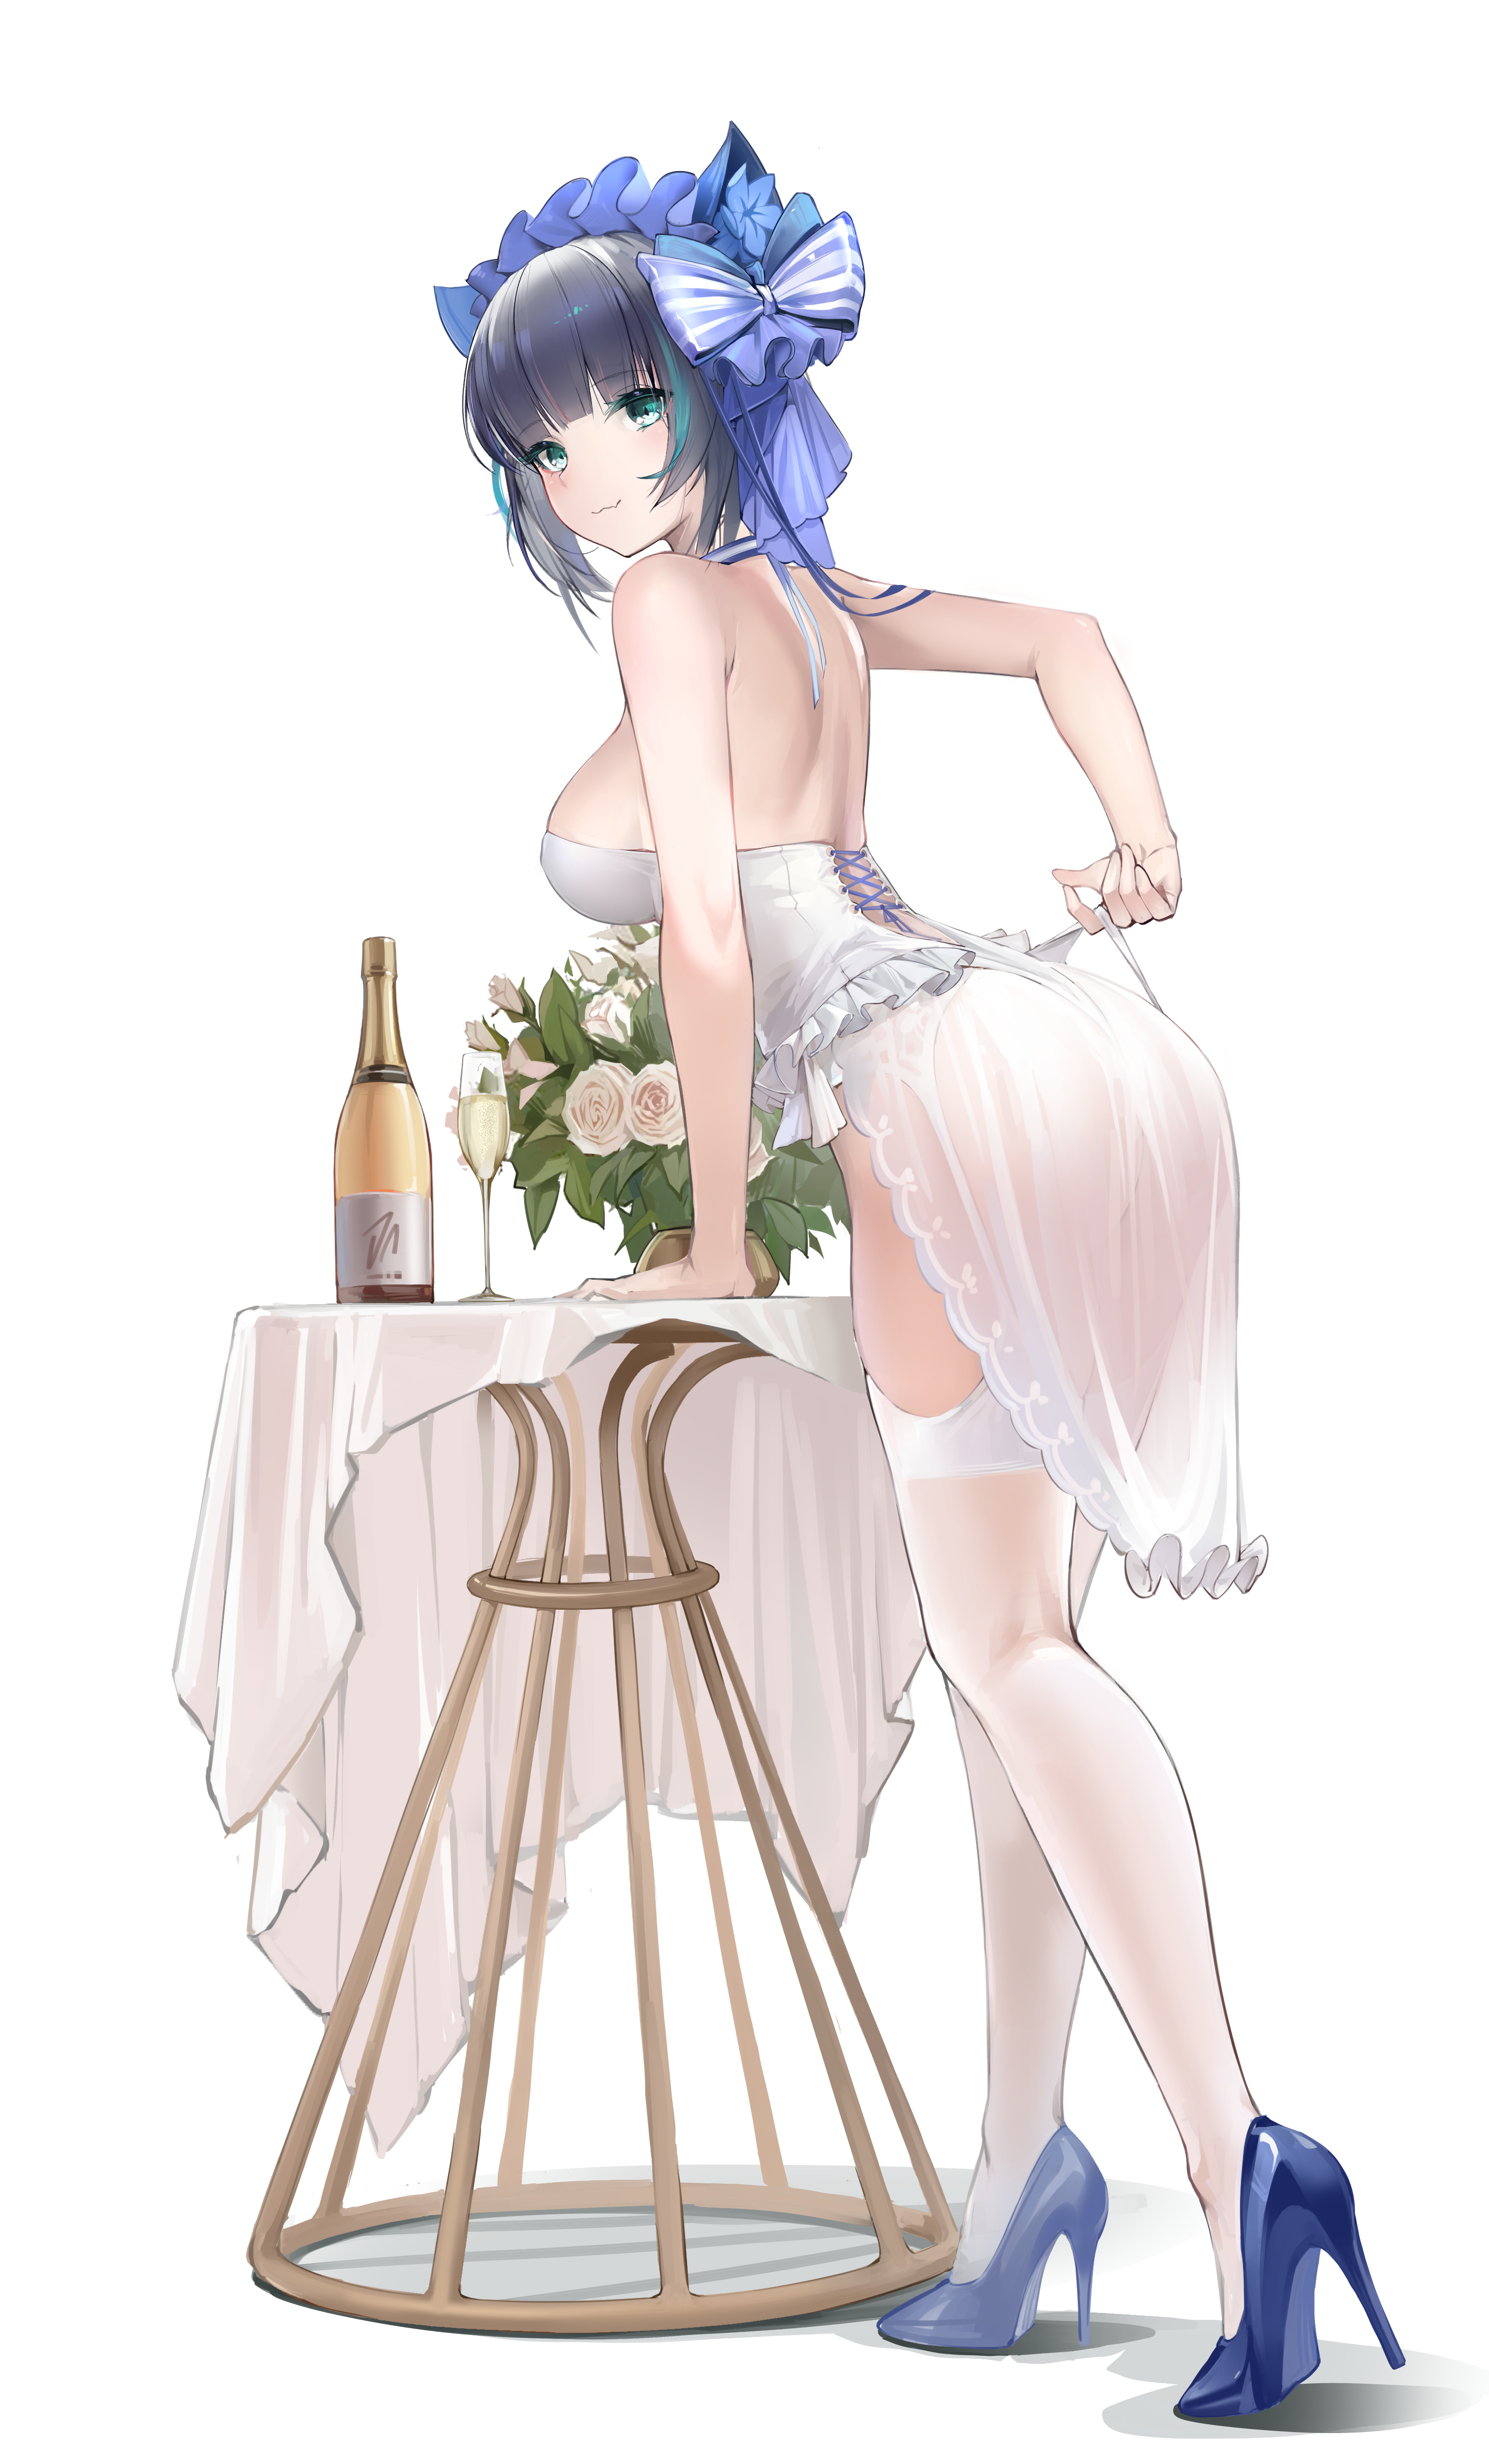 Anime 2986x4941 HMS Cheshire Azur Lane anime girls dress stockings blue eyes heels big boobs bareback flowers champagne wine glass